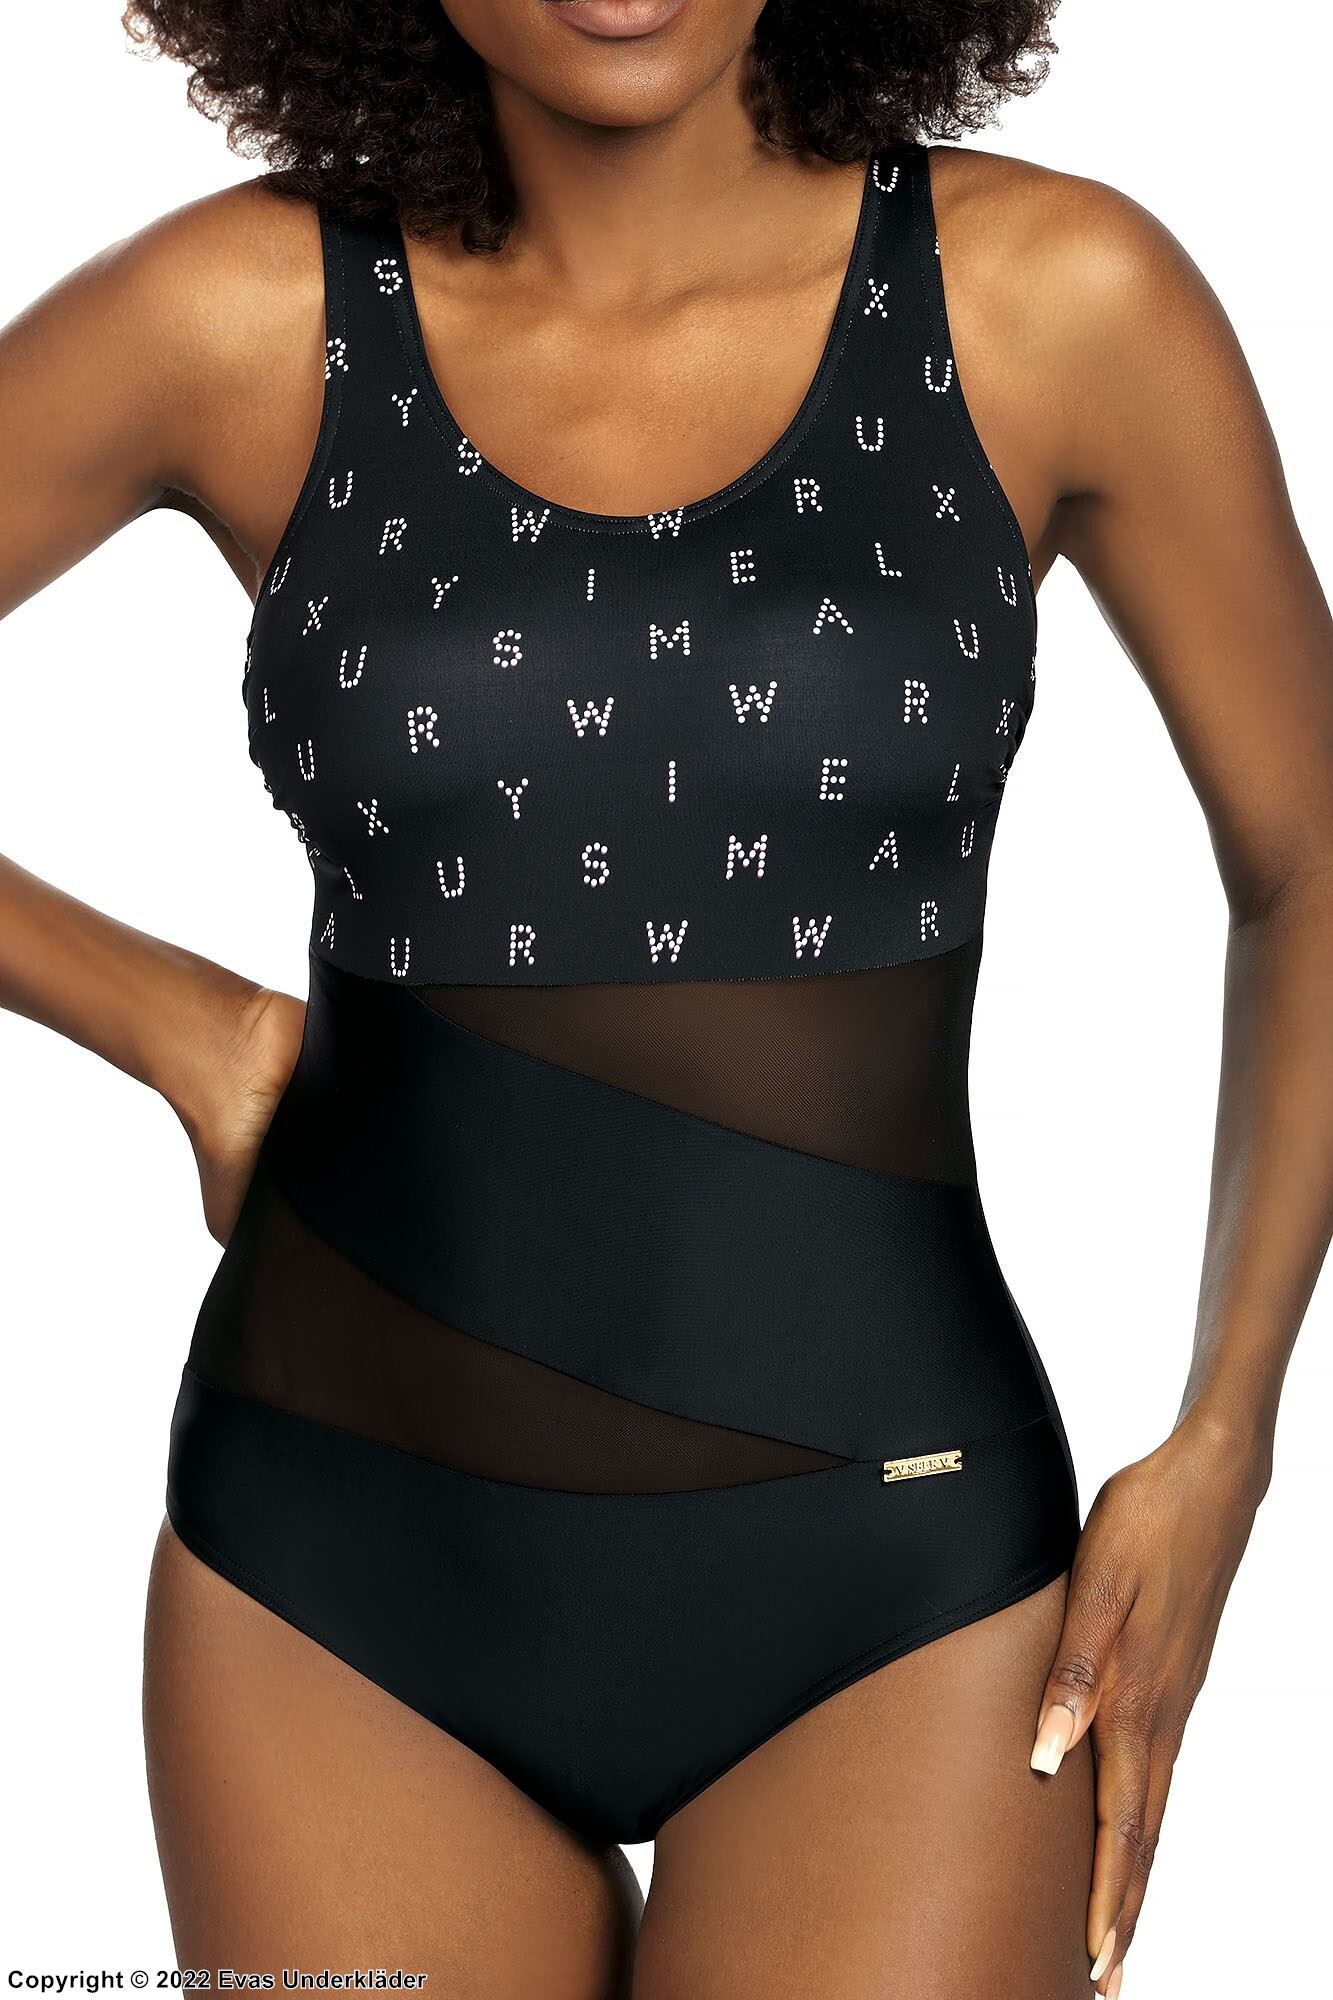 One-piece swimsuit, wide shoulder straps